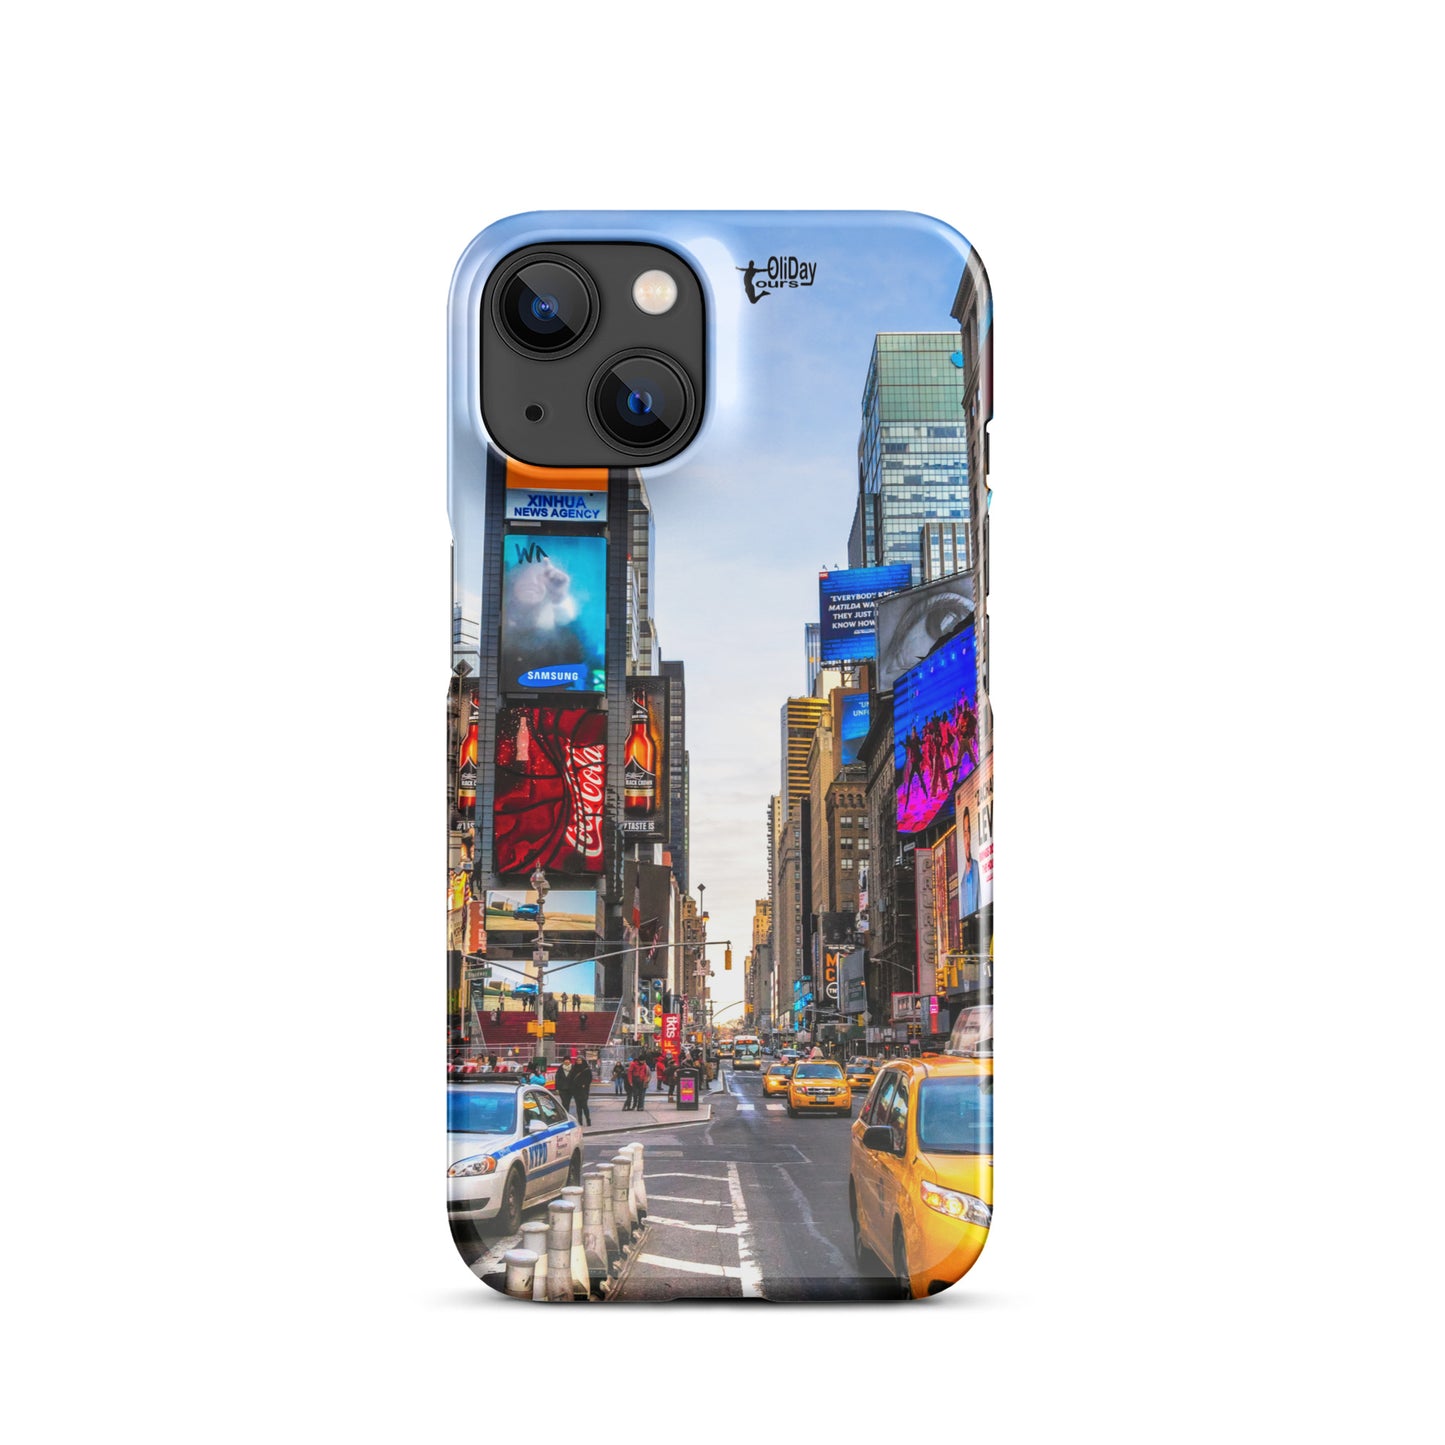 Times Square Olidaytours Snapcase iPhone®-Hülle